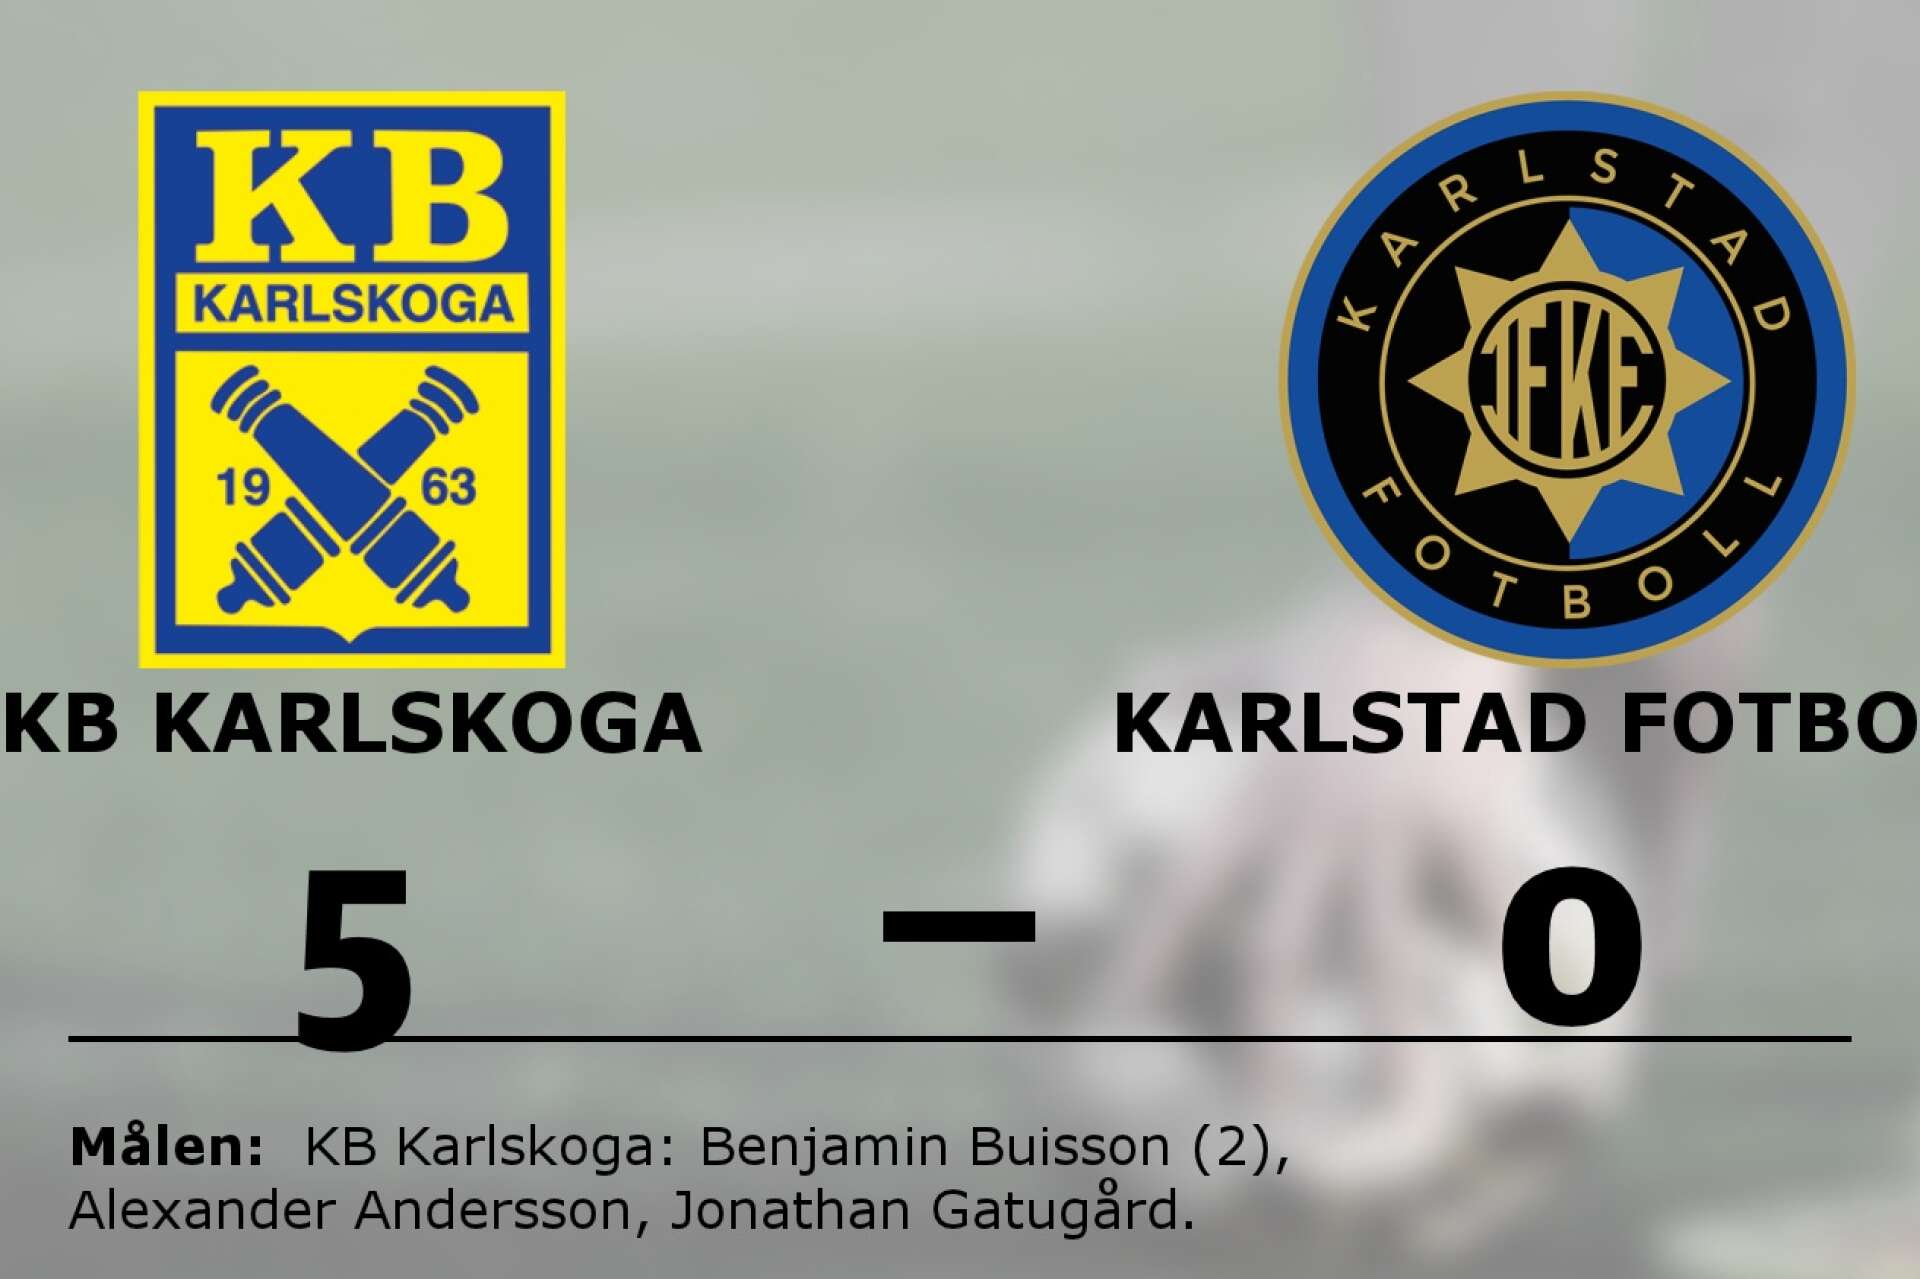 KB Karlskoga vann mot IF Karlstad Fotbollsutveckling